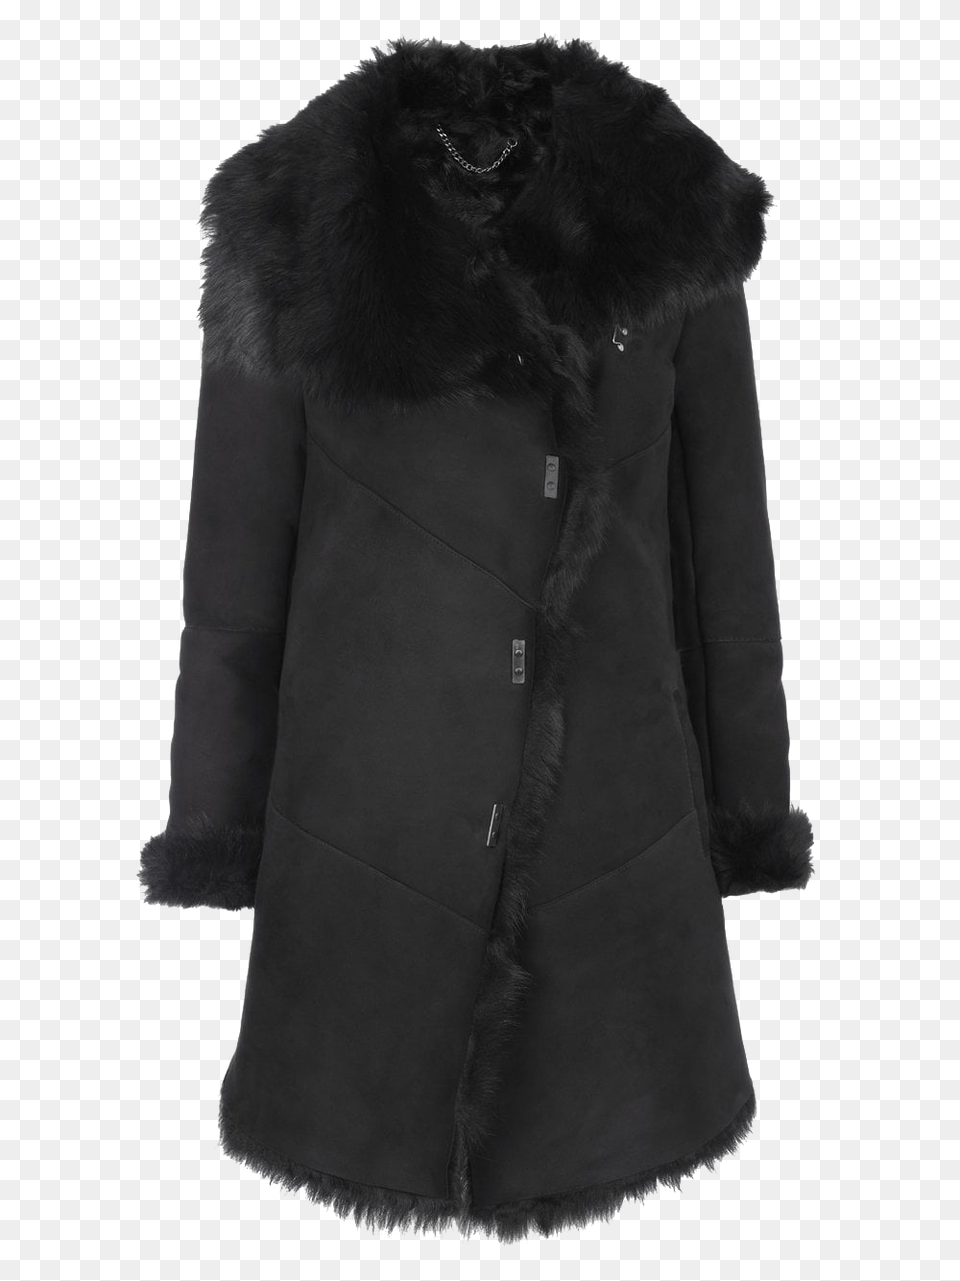 Shearling Coat Transparent Clothing, Overcoat, Fur, Jacket Png Image